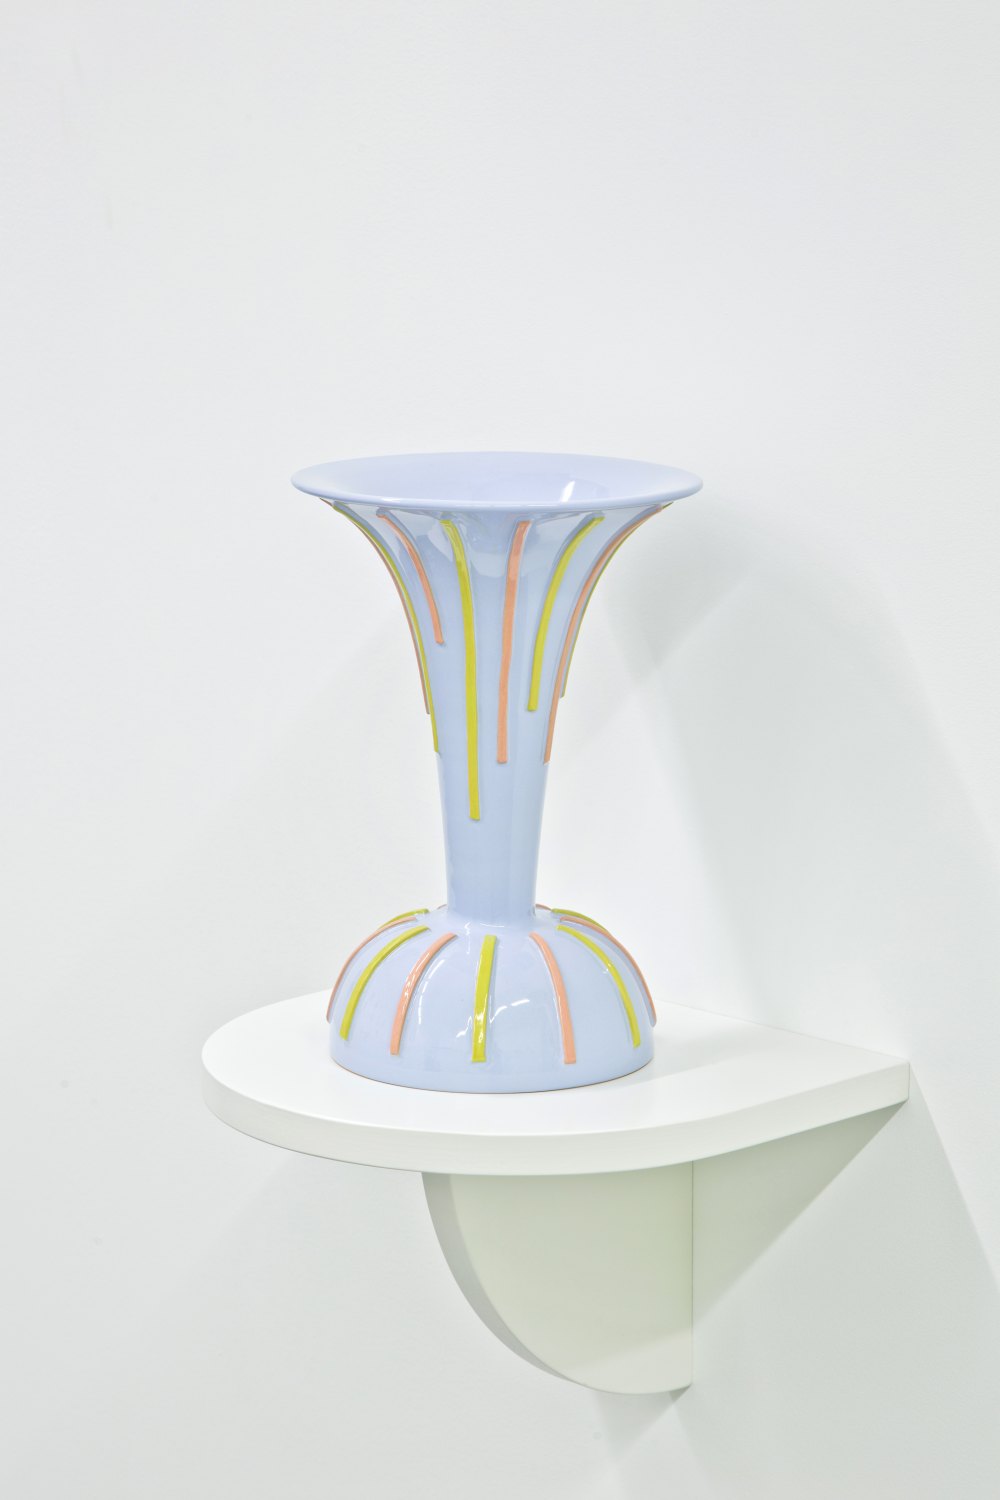 Marc Camille Chaimowicz Tulip vase, 2014 Glazed ceramic, 33 cm × ∅ 21 cm